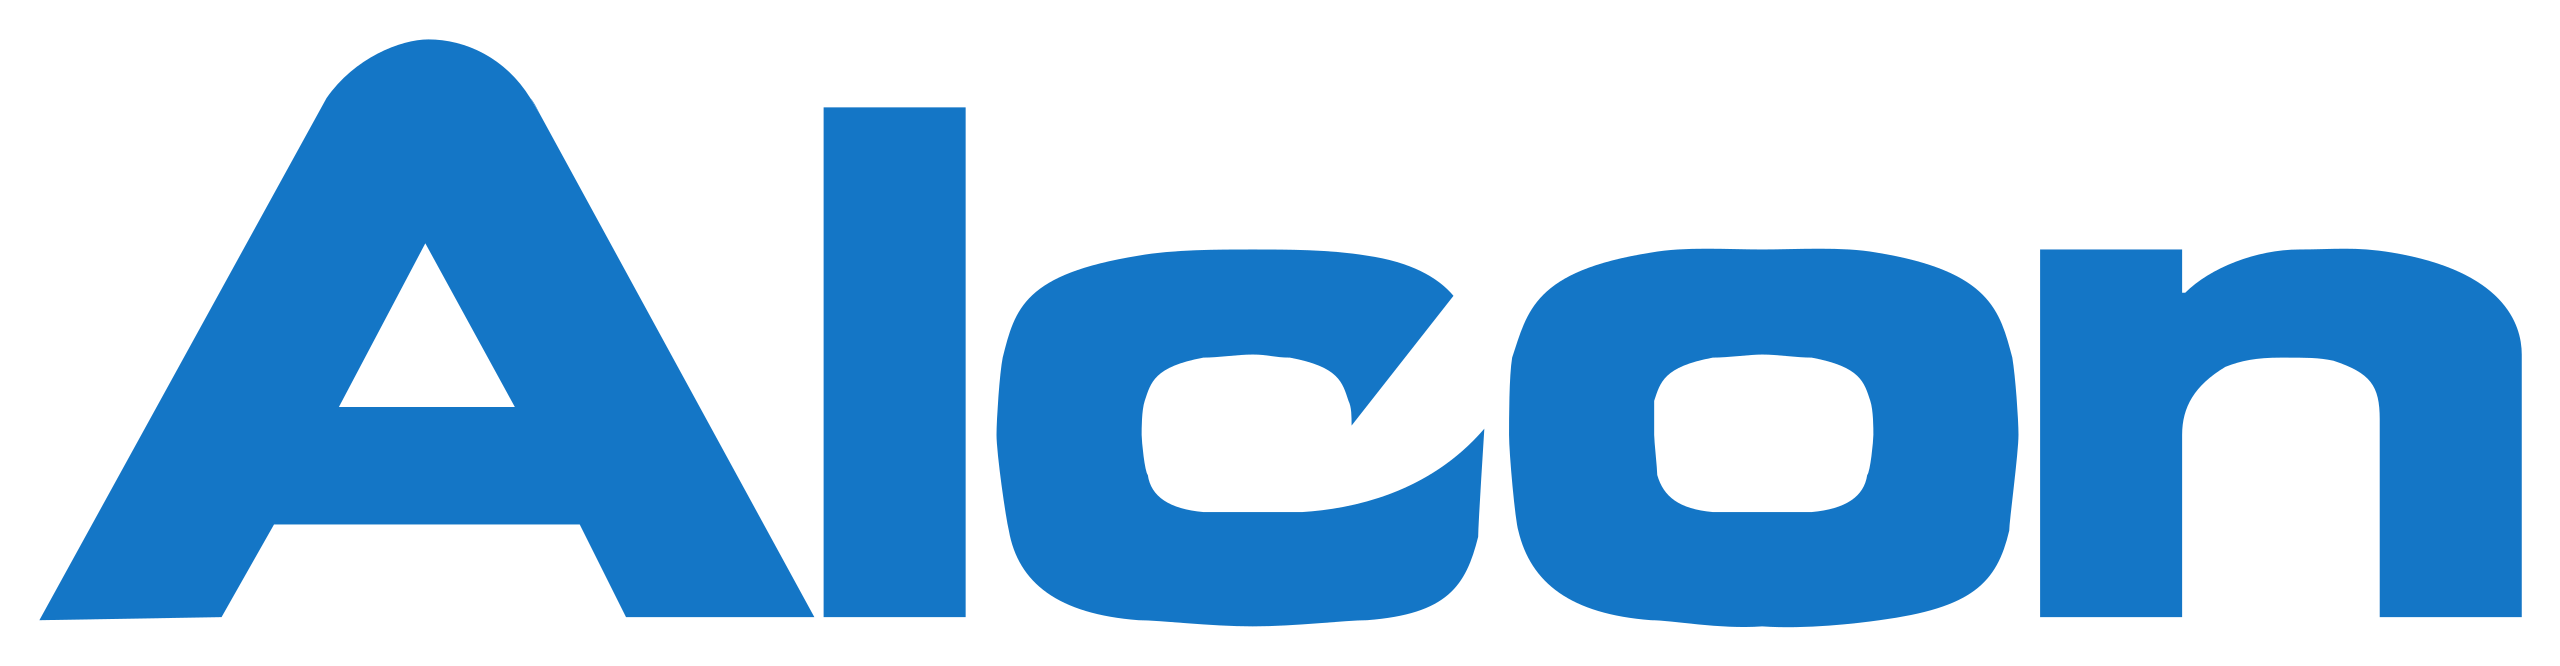 2560px-Logo_Alcon.svg